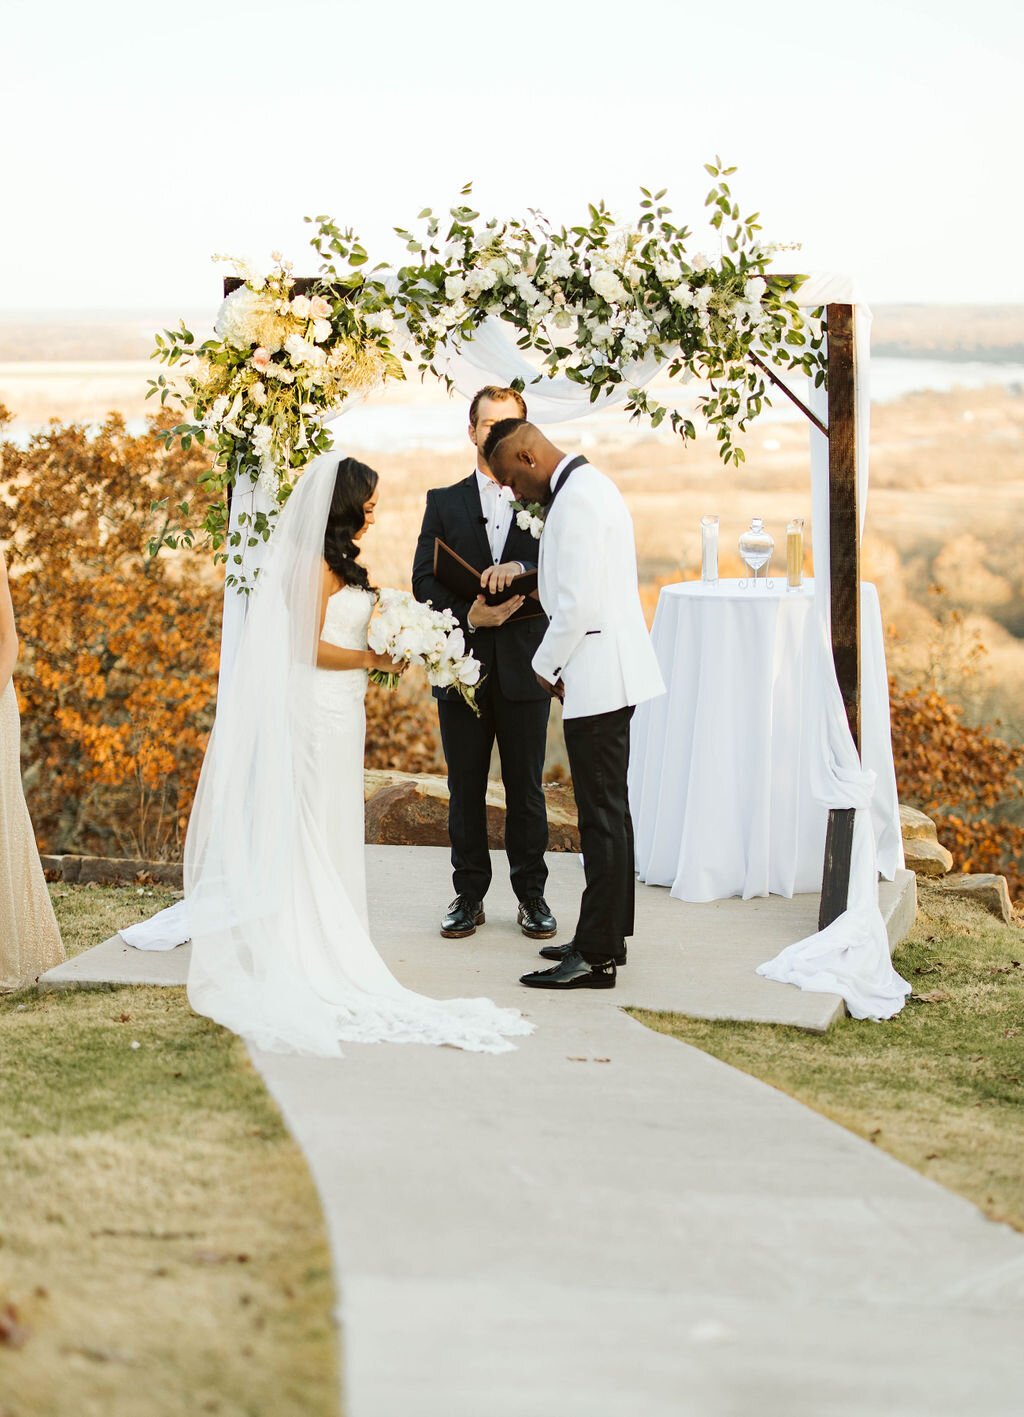 Fall Outdoor Wedding Venue Dream Point Ranch Tulsa Bixby Oklahoma (46).jpg